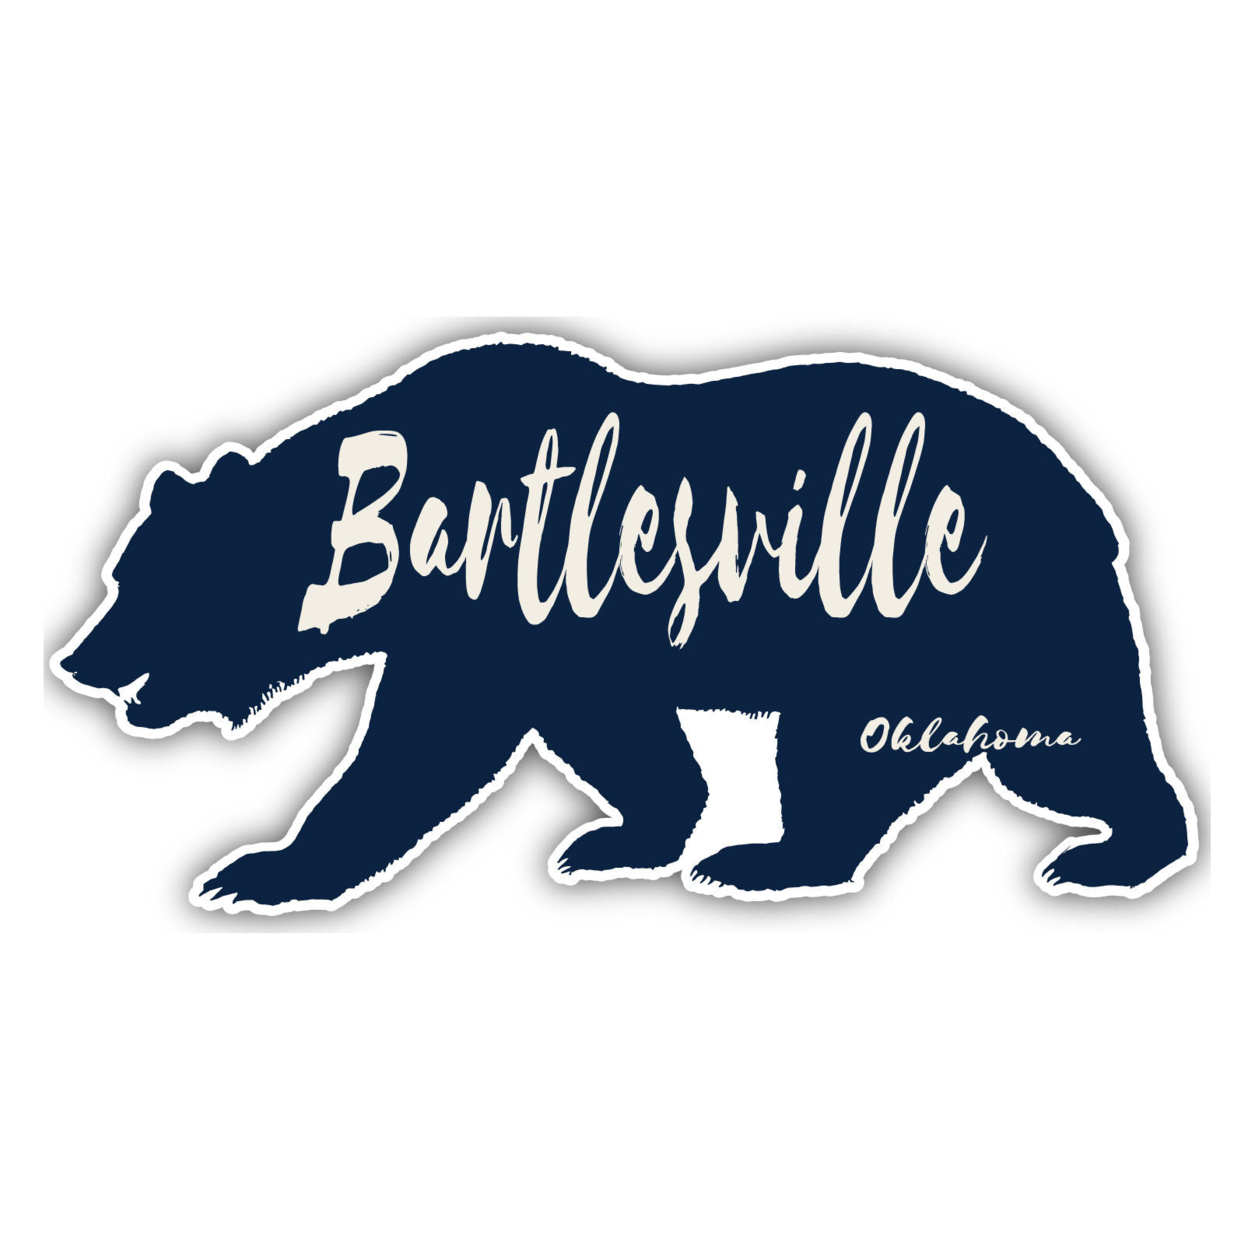 Bartlesville Oklahoma Souvenir Decorative Stickers (Choose Theme And Size) - Single Unit, 8-Inch, Bear